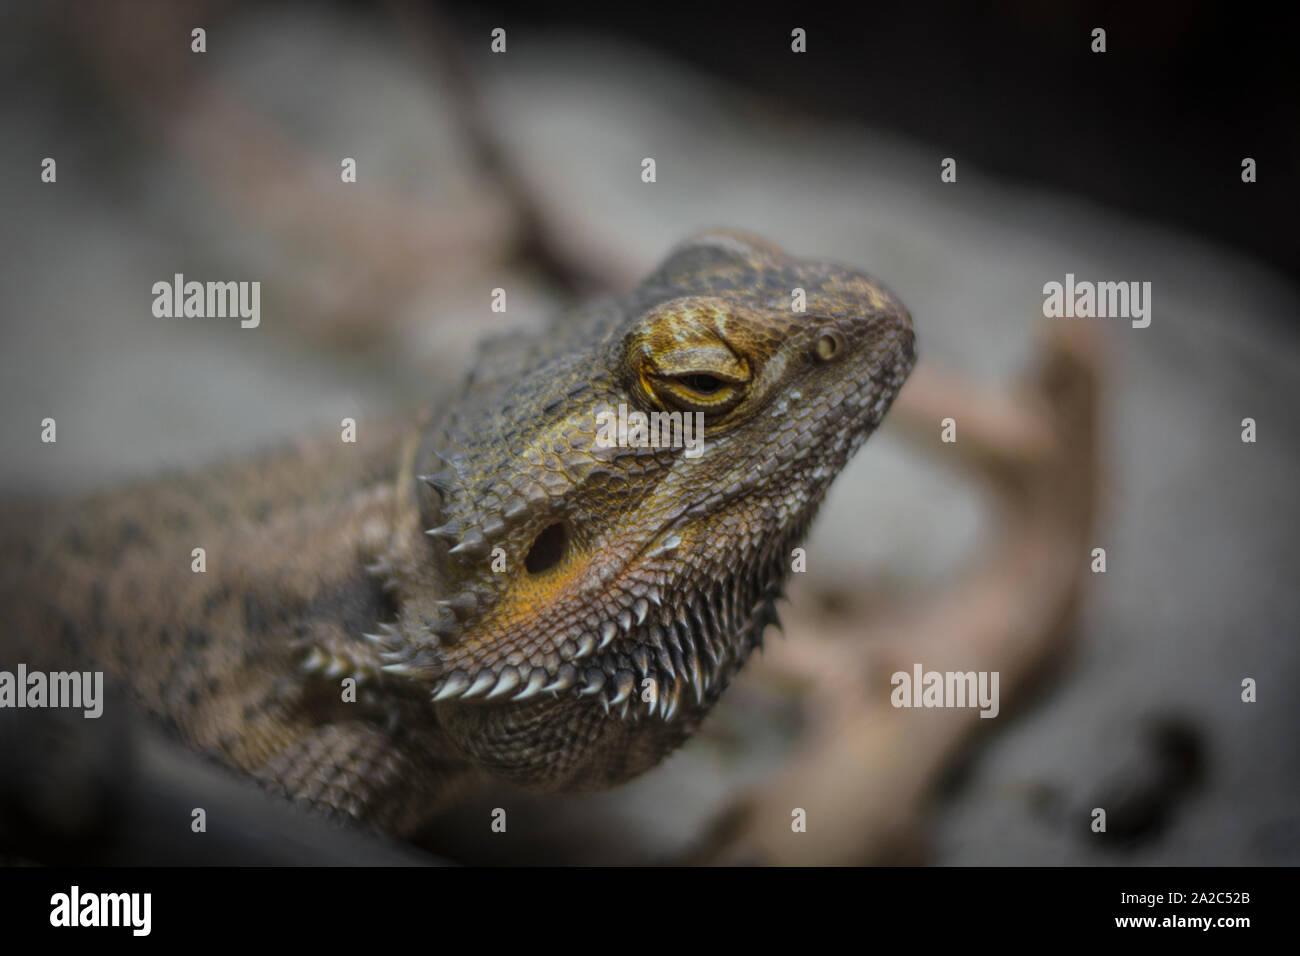 Dragon lizard Stock Photo